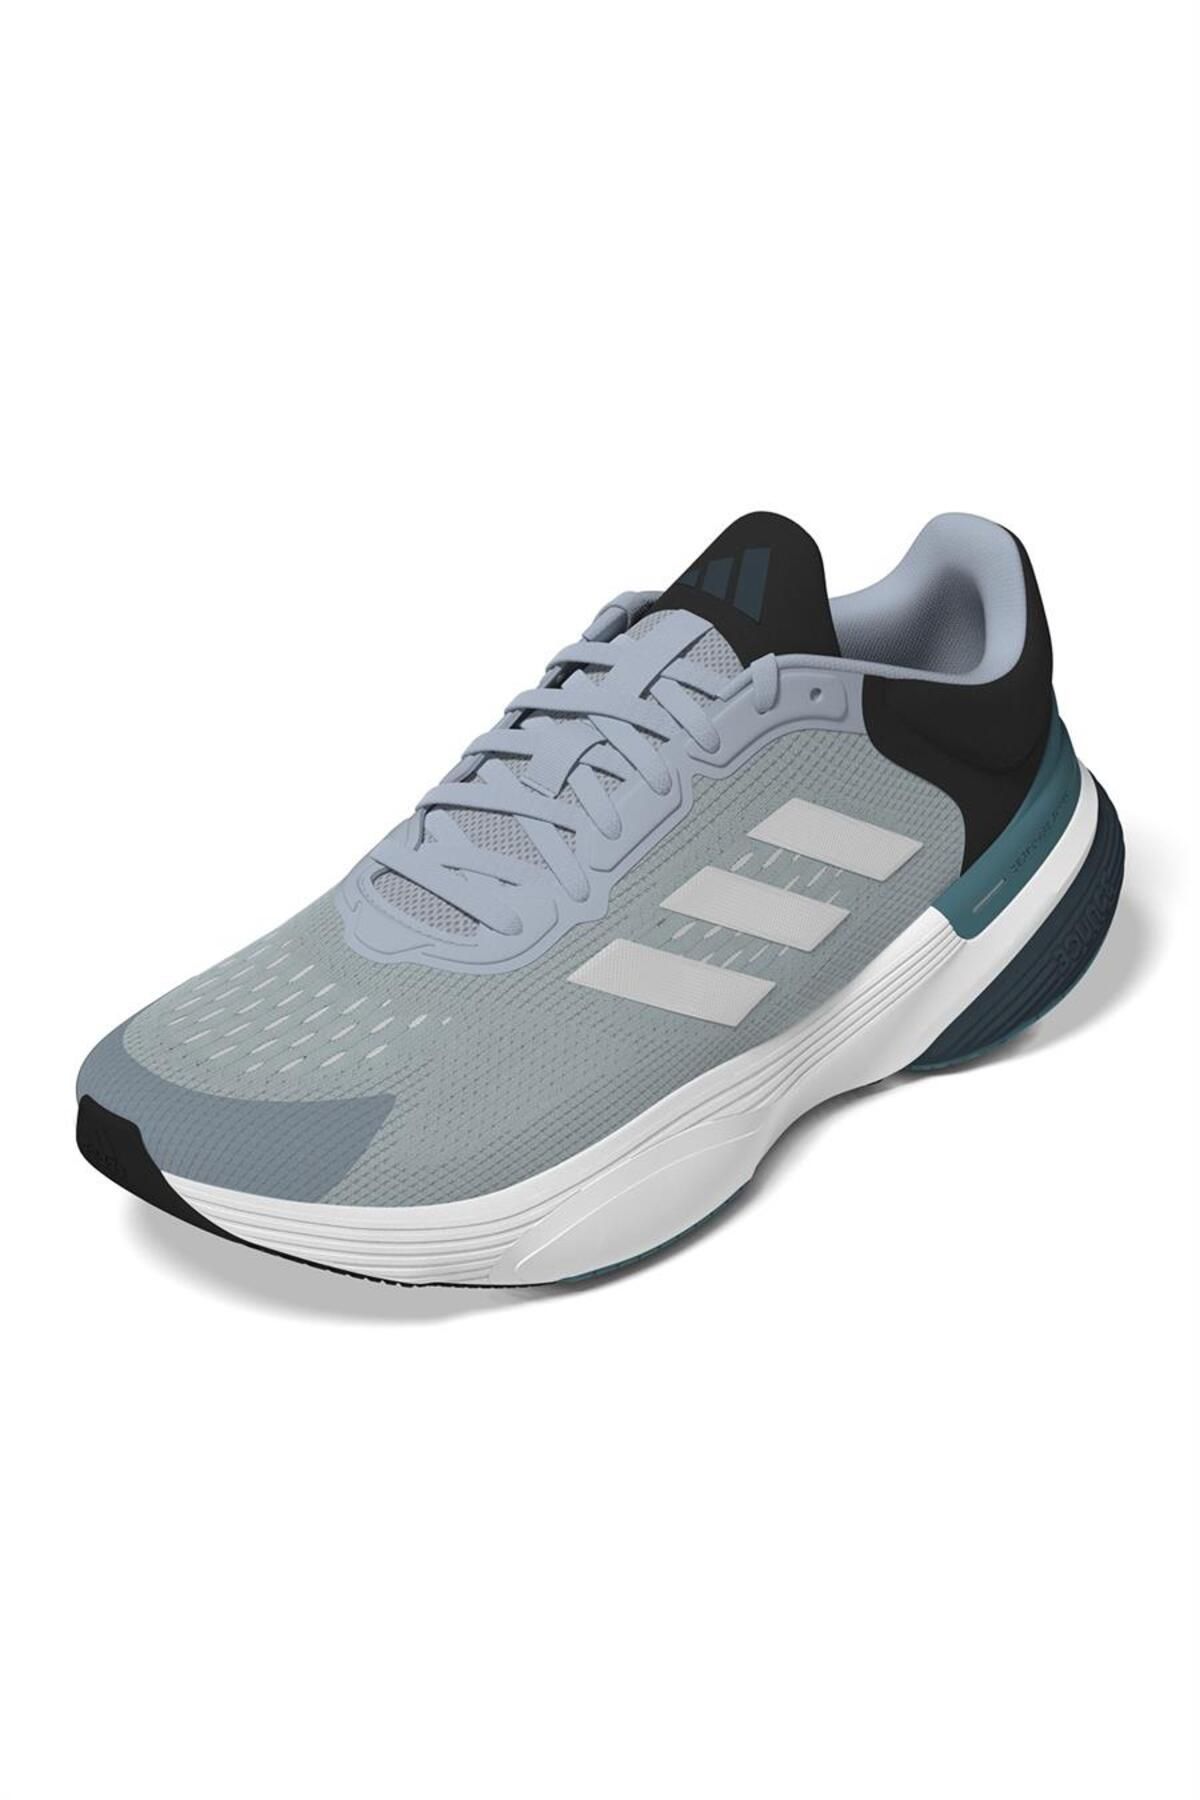 adidas Response Super 3.0 Erkek Koşu Ayakkabısı Ig0337